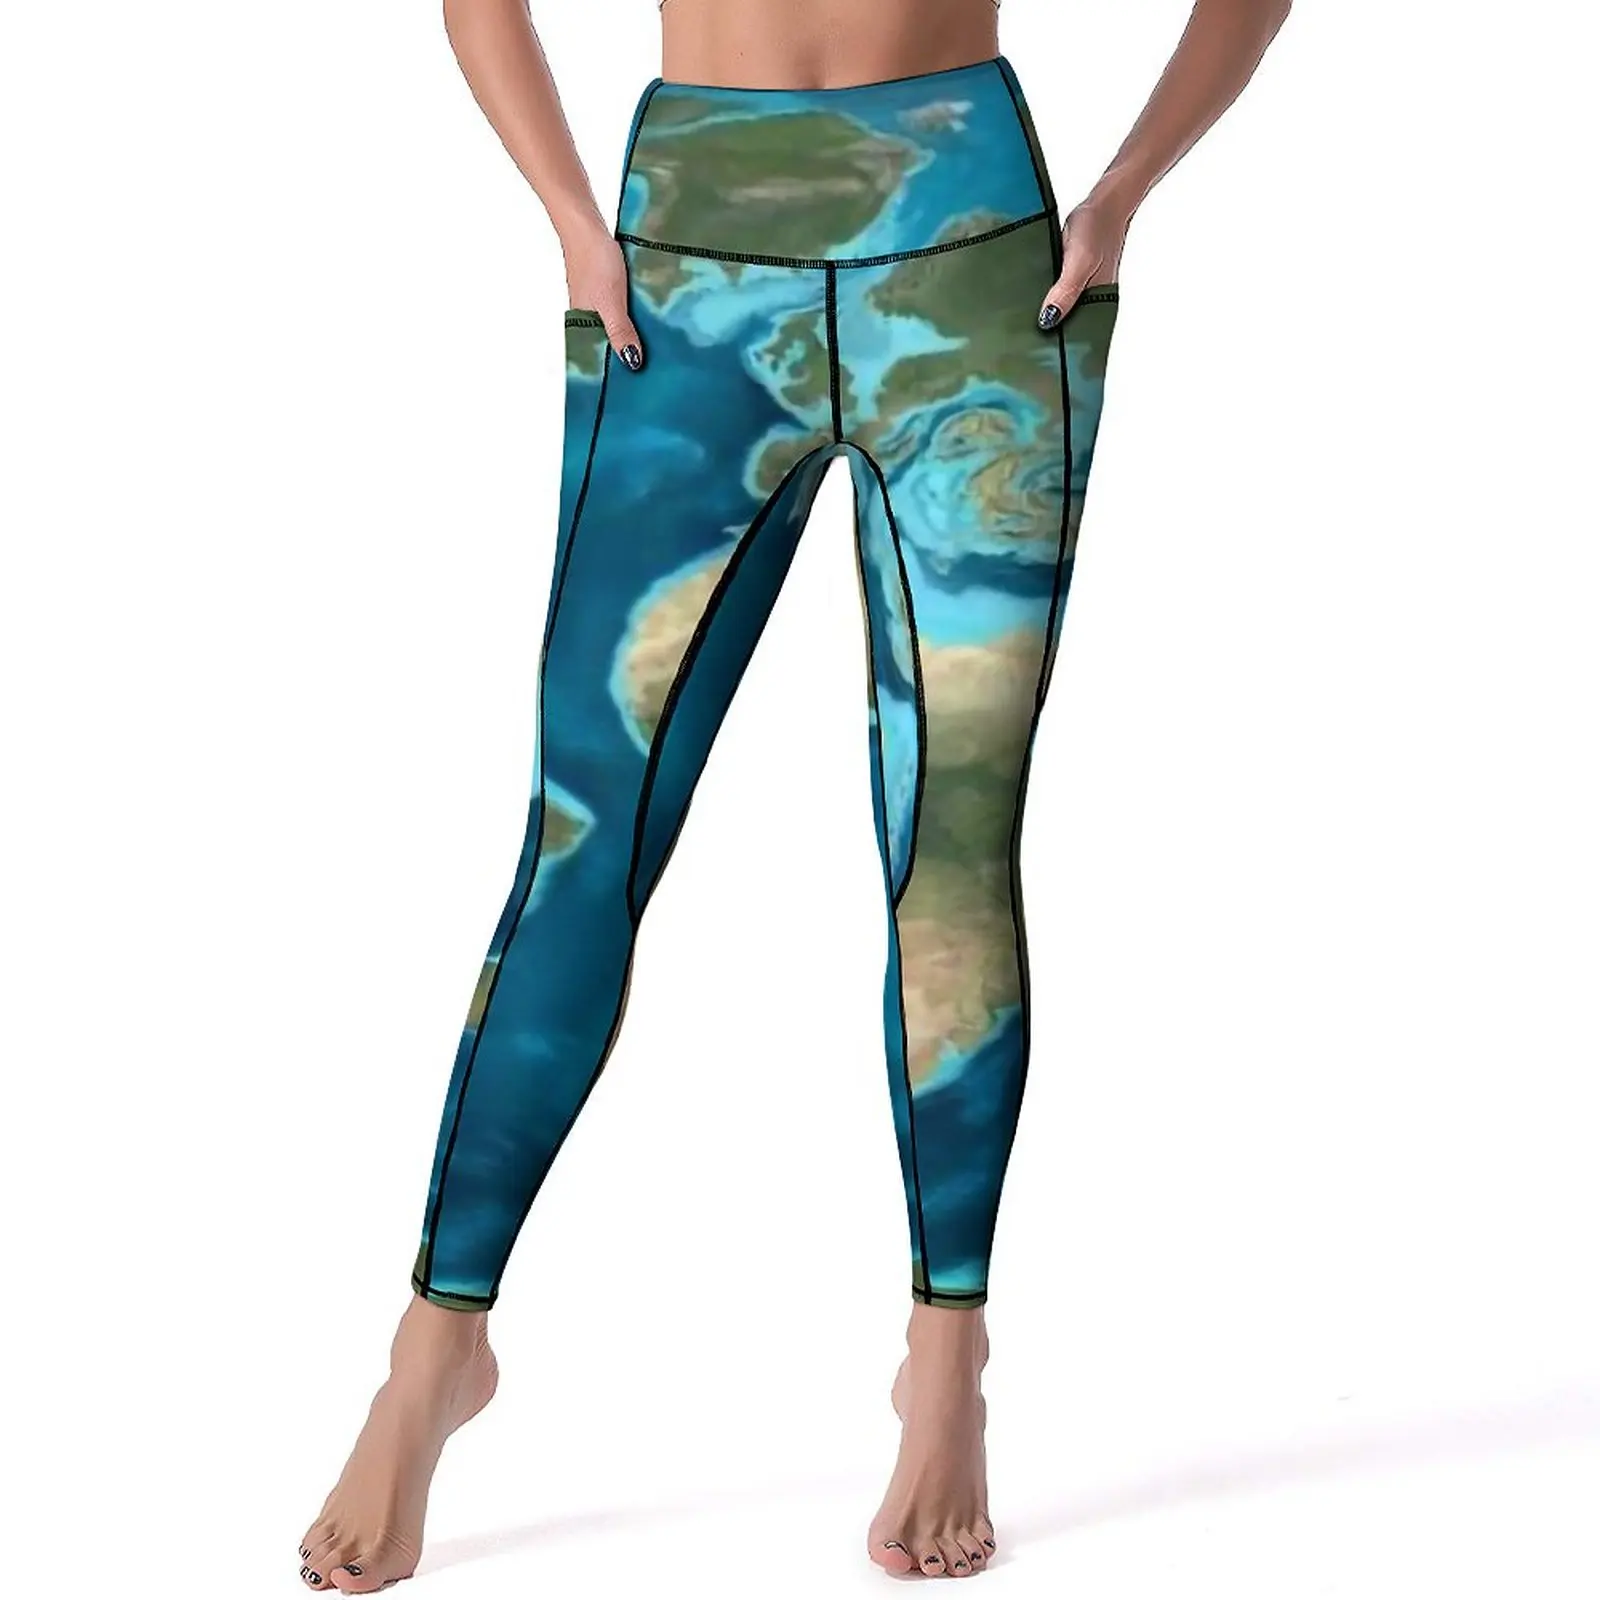 

Earth Map Leggings Sexy 65 Million Years Ago Push Up Yoga Pants Elegant Quick-Dry Leggins Lady Graphic Gym Sports Tights